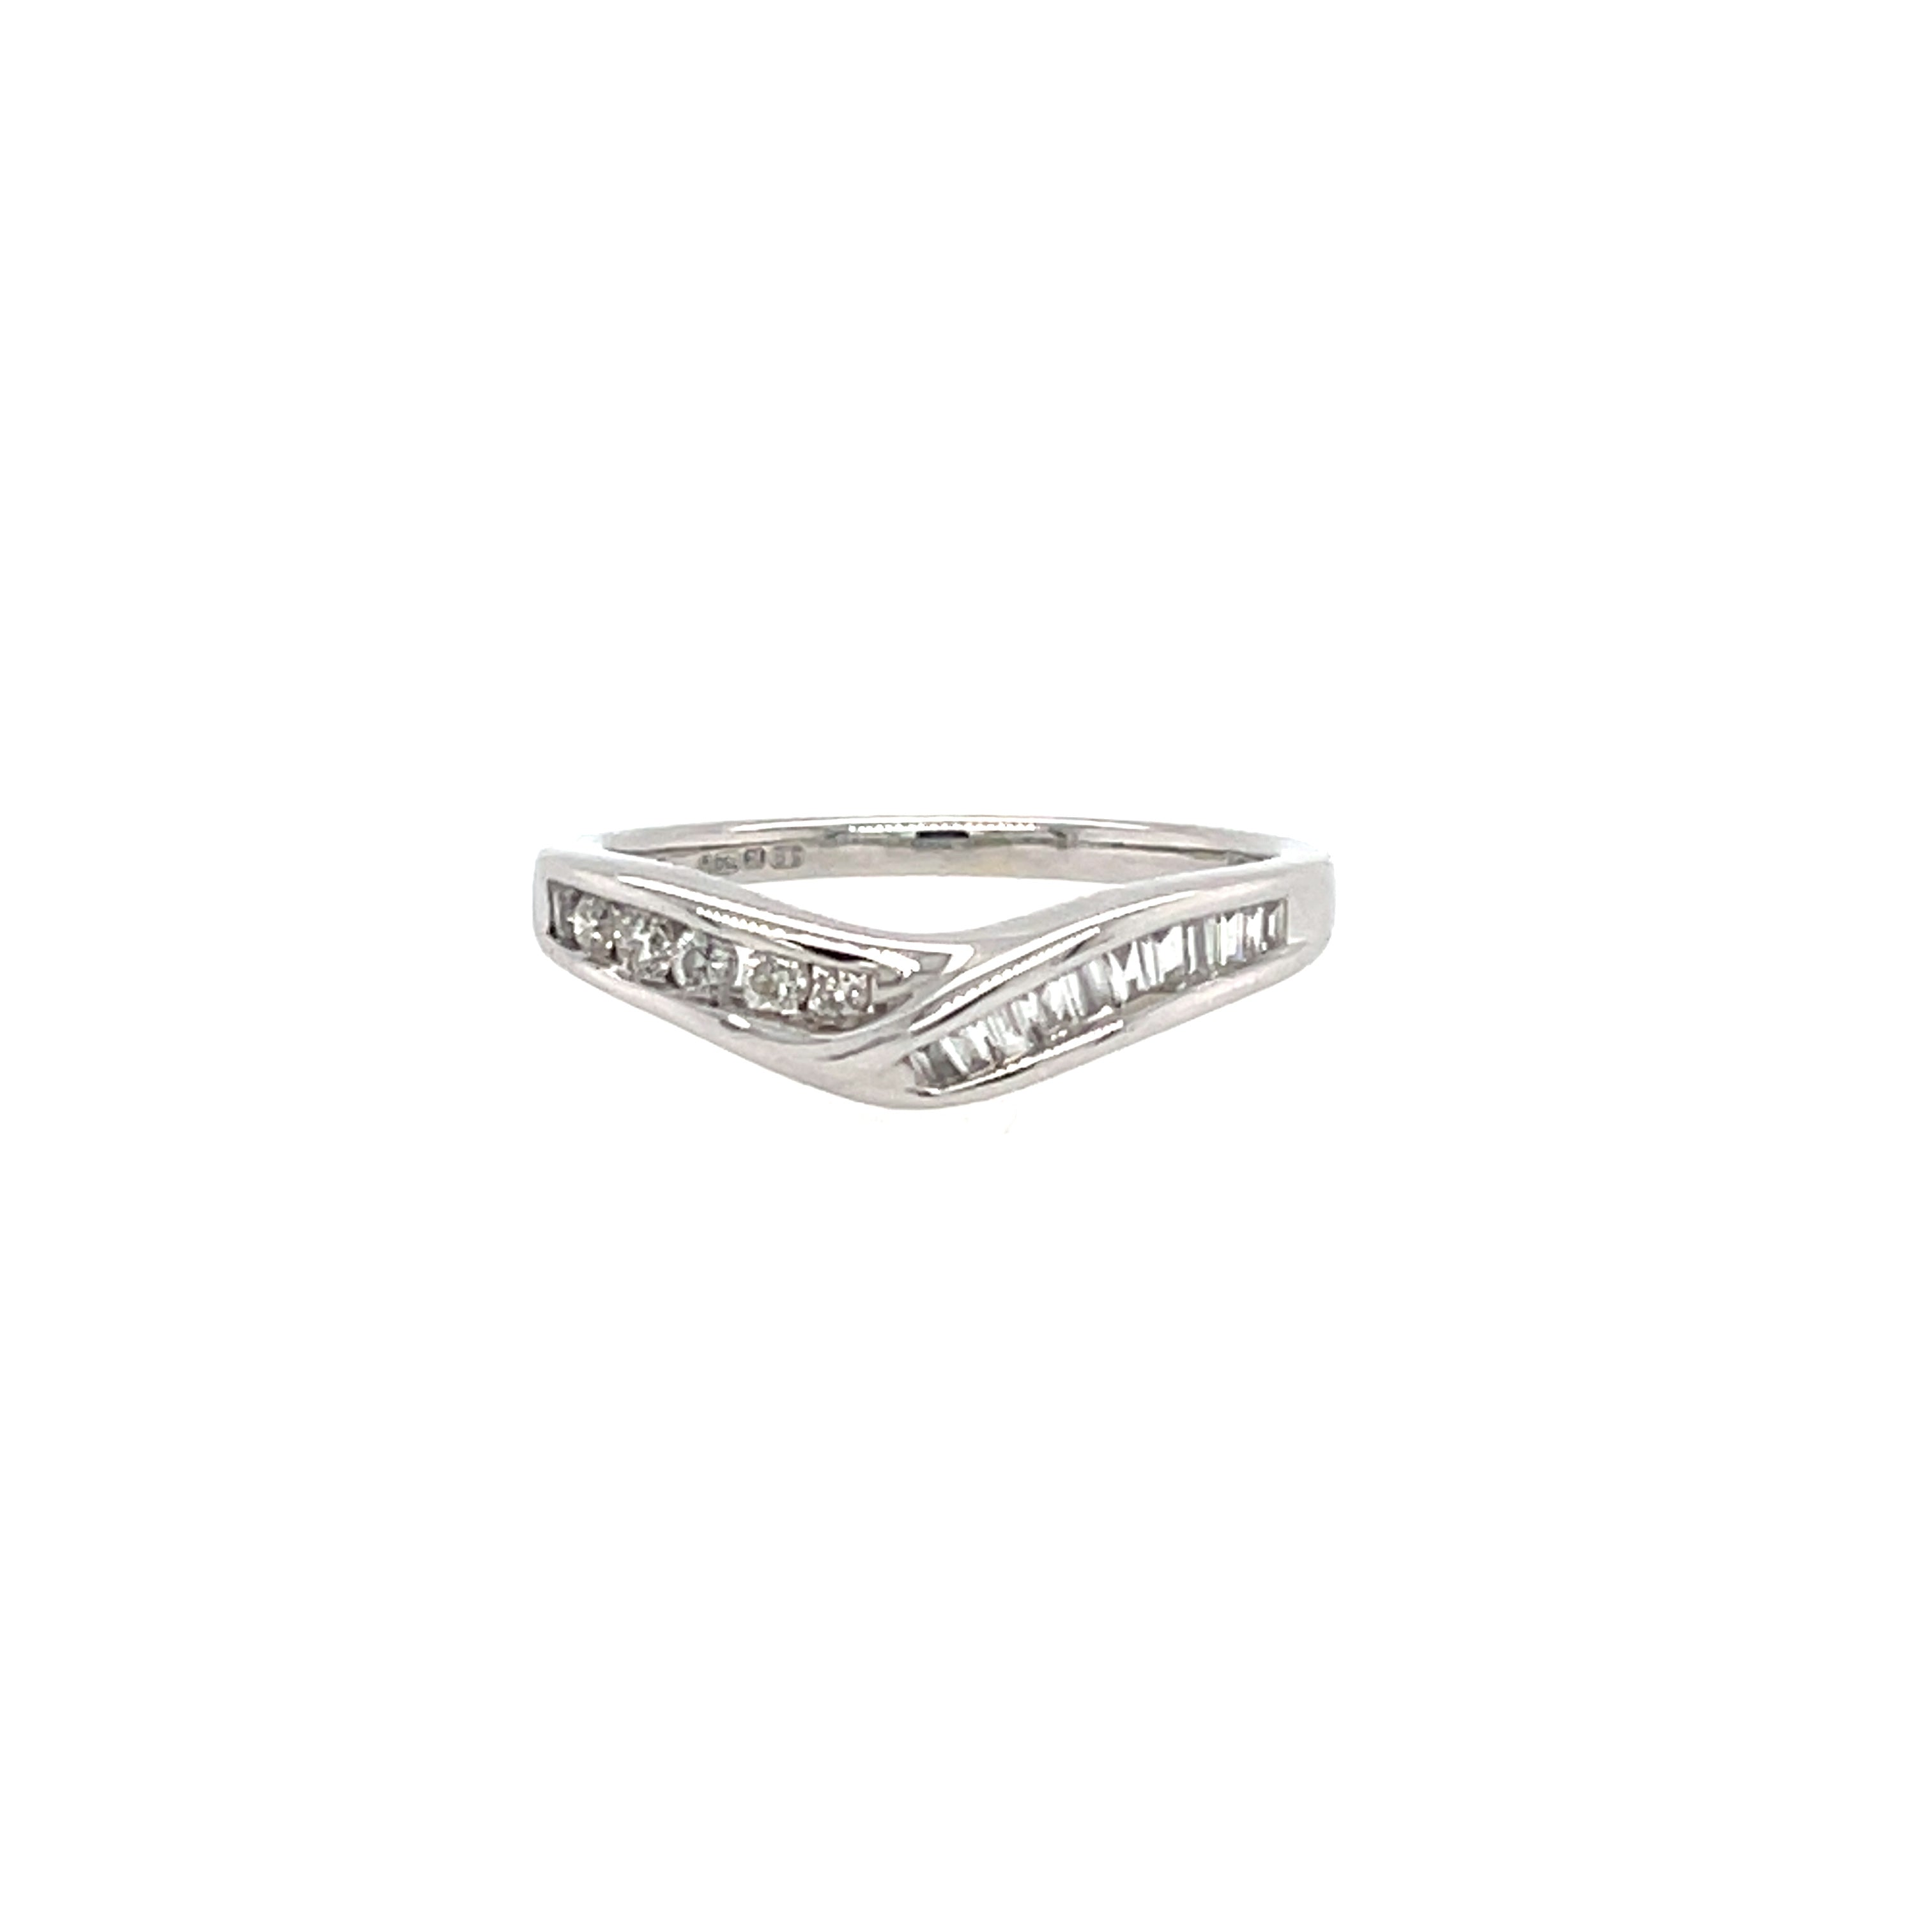 18ct White Gold 0.25ct Mixed Cut Diamond Wishbone Eternity Ring - Size M